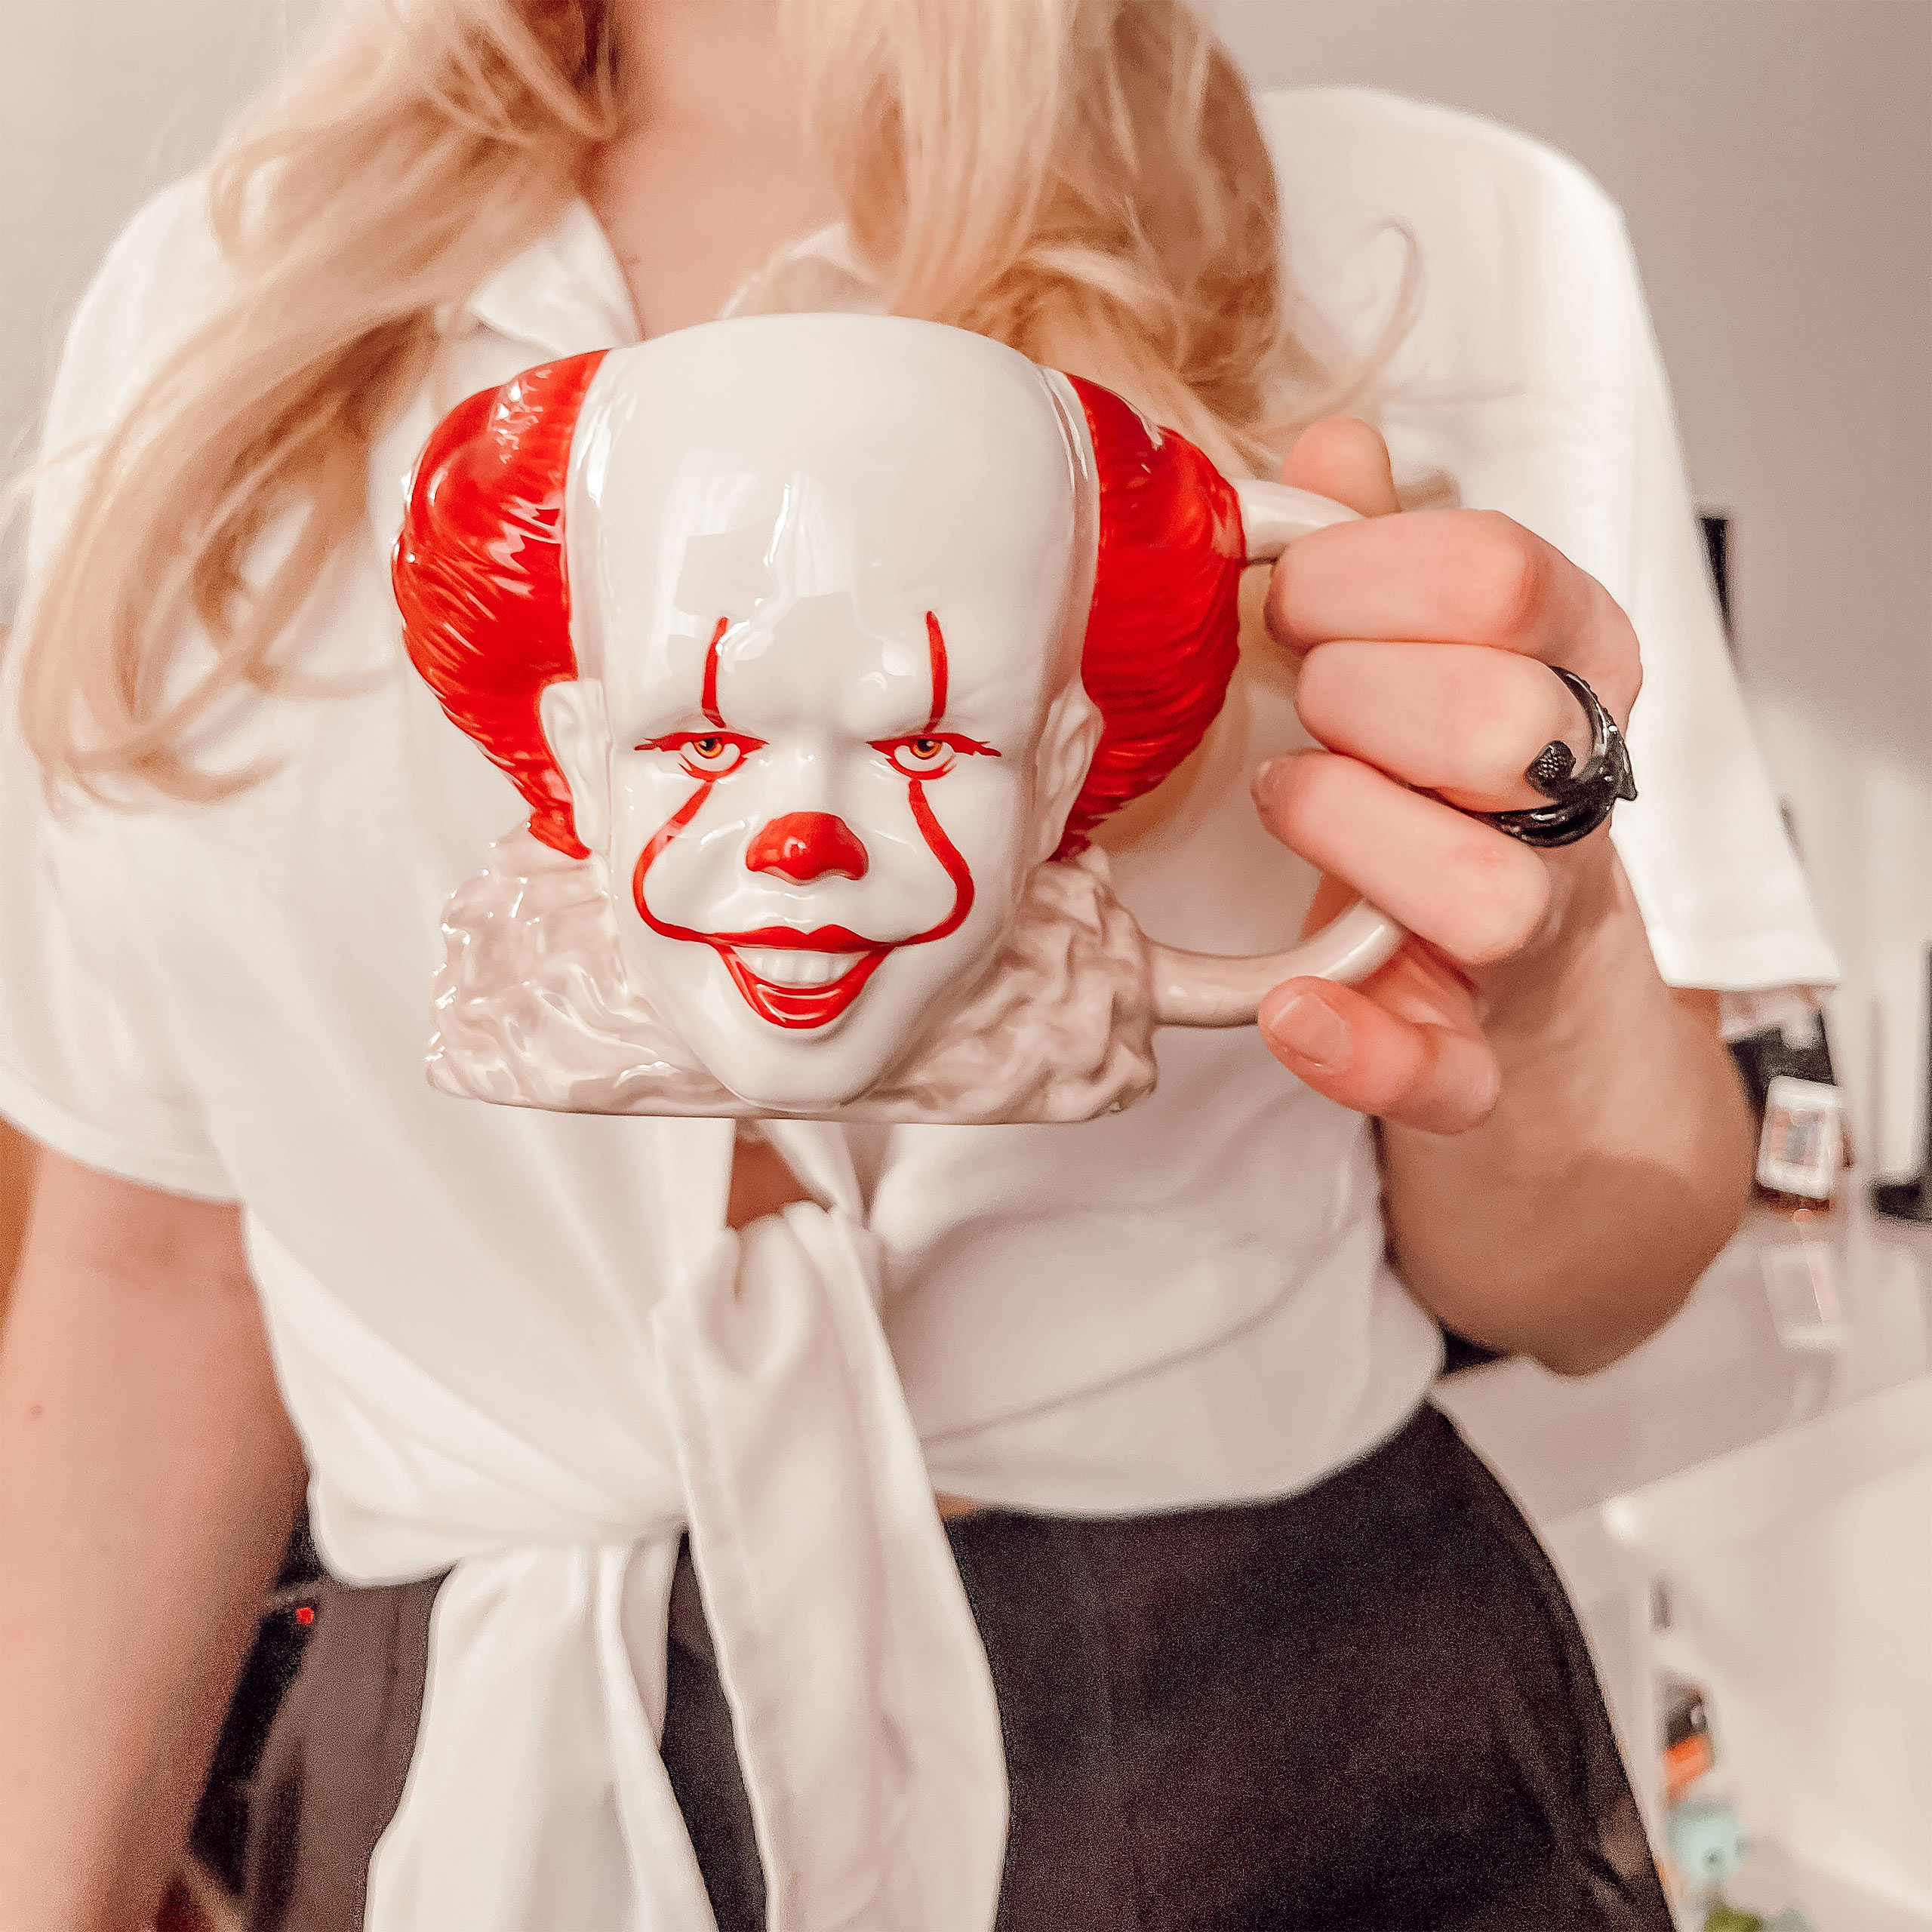 Stephen King ES - Pennywise 3D mug